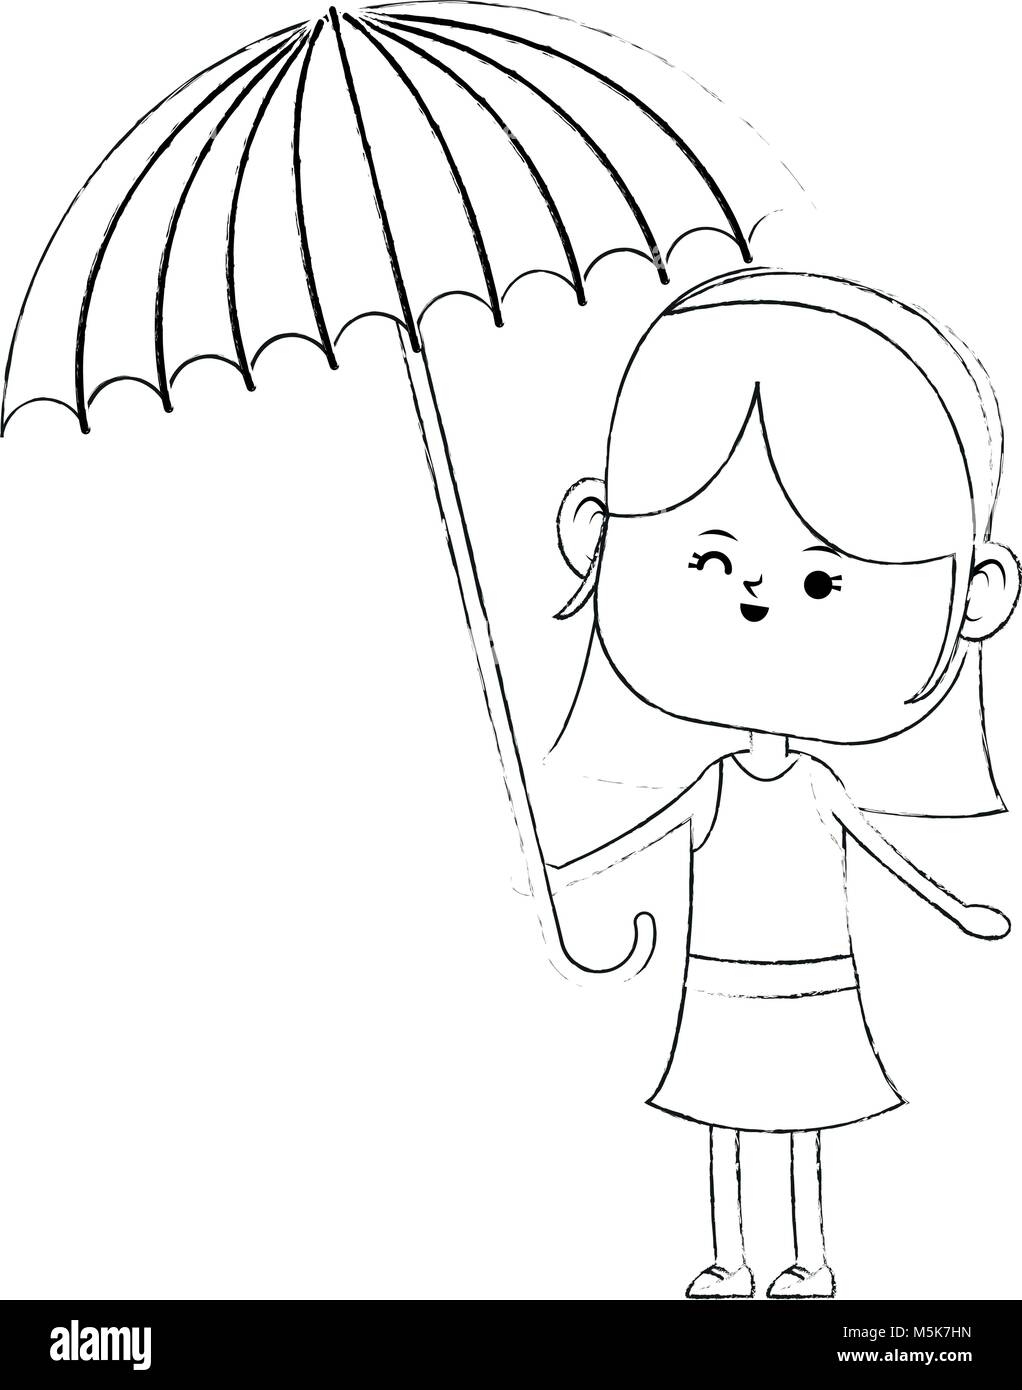 Madchen Mit Regenschirm Stock Vektorgrafik Alamy